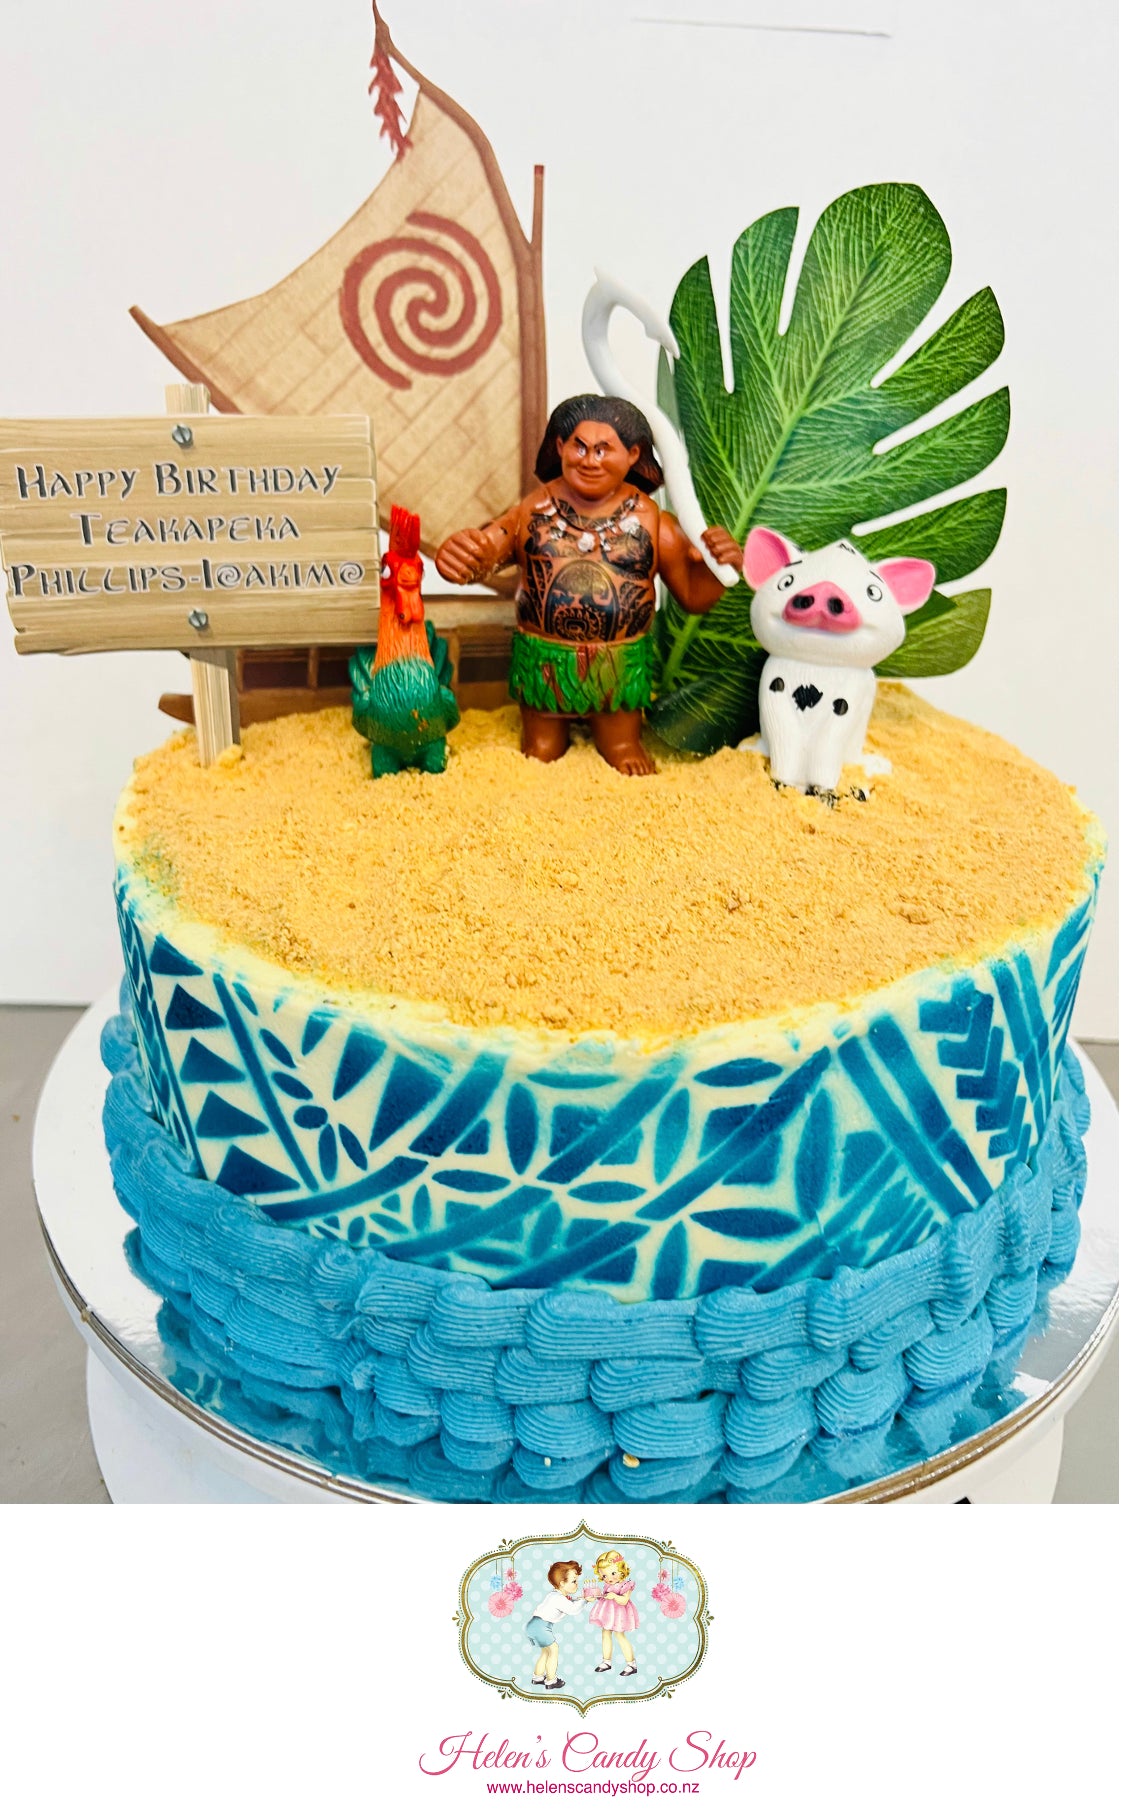 Disney , Cartoons & Movies Themed Celebration Cake